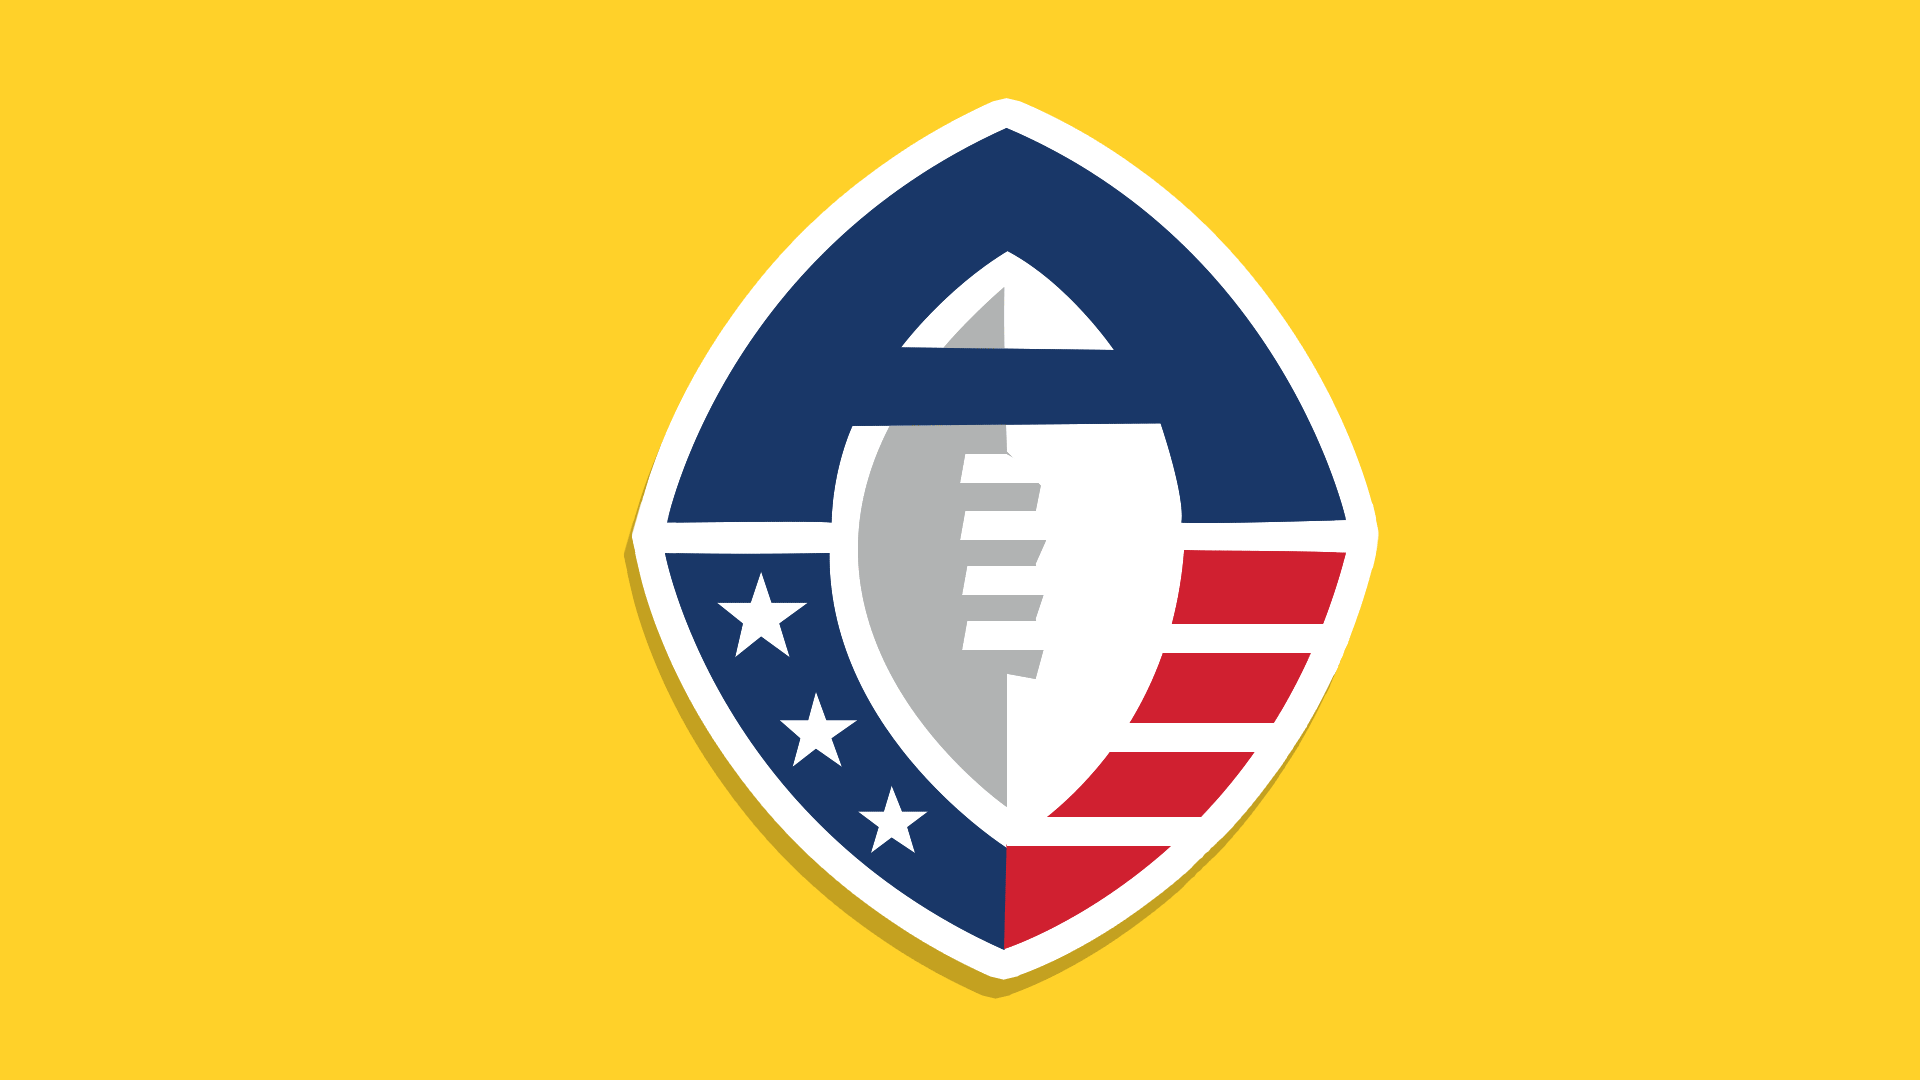 Photos: Alliance of American Football team logos